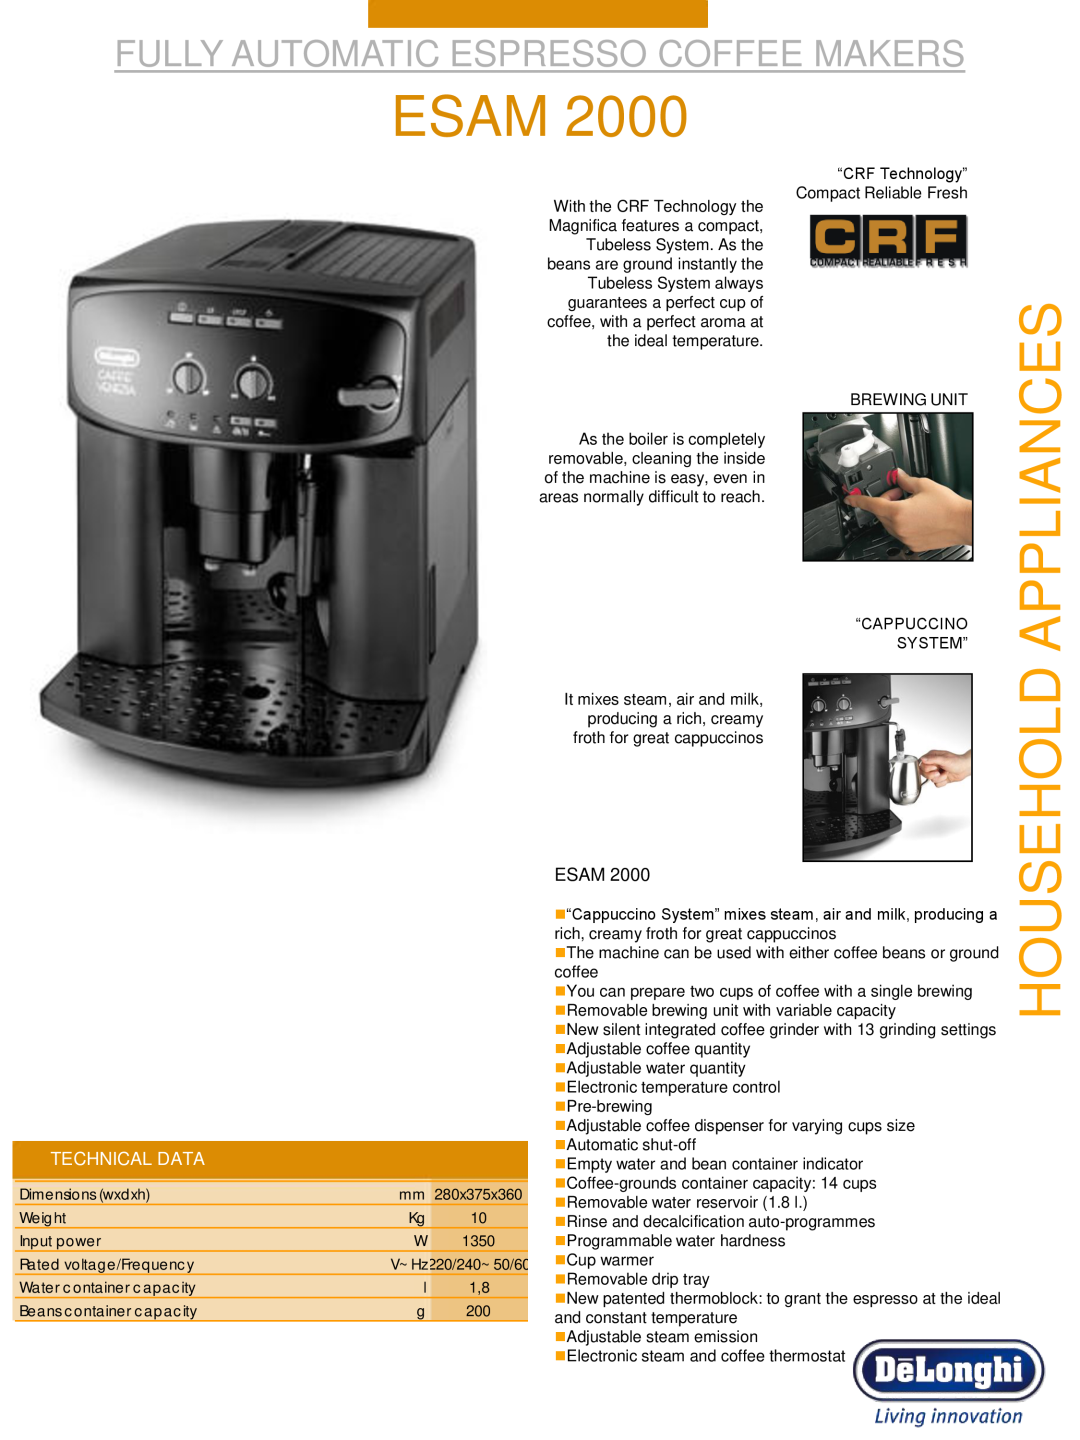 DeLonghi ESAM 2000 dimensions Esam, Fully Automatic Espresso Coffee Makers, Household Appliances, Technical Data 